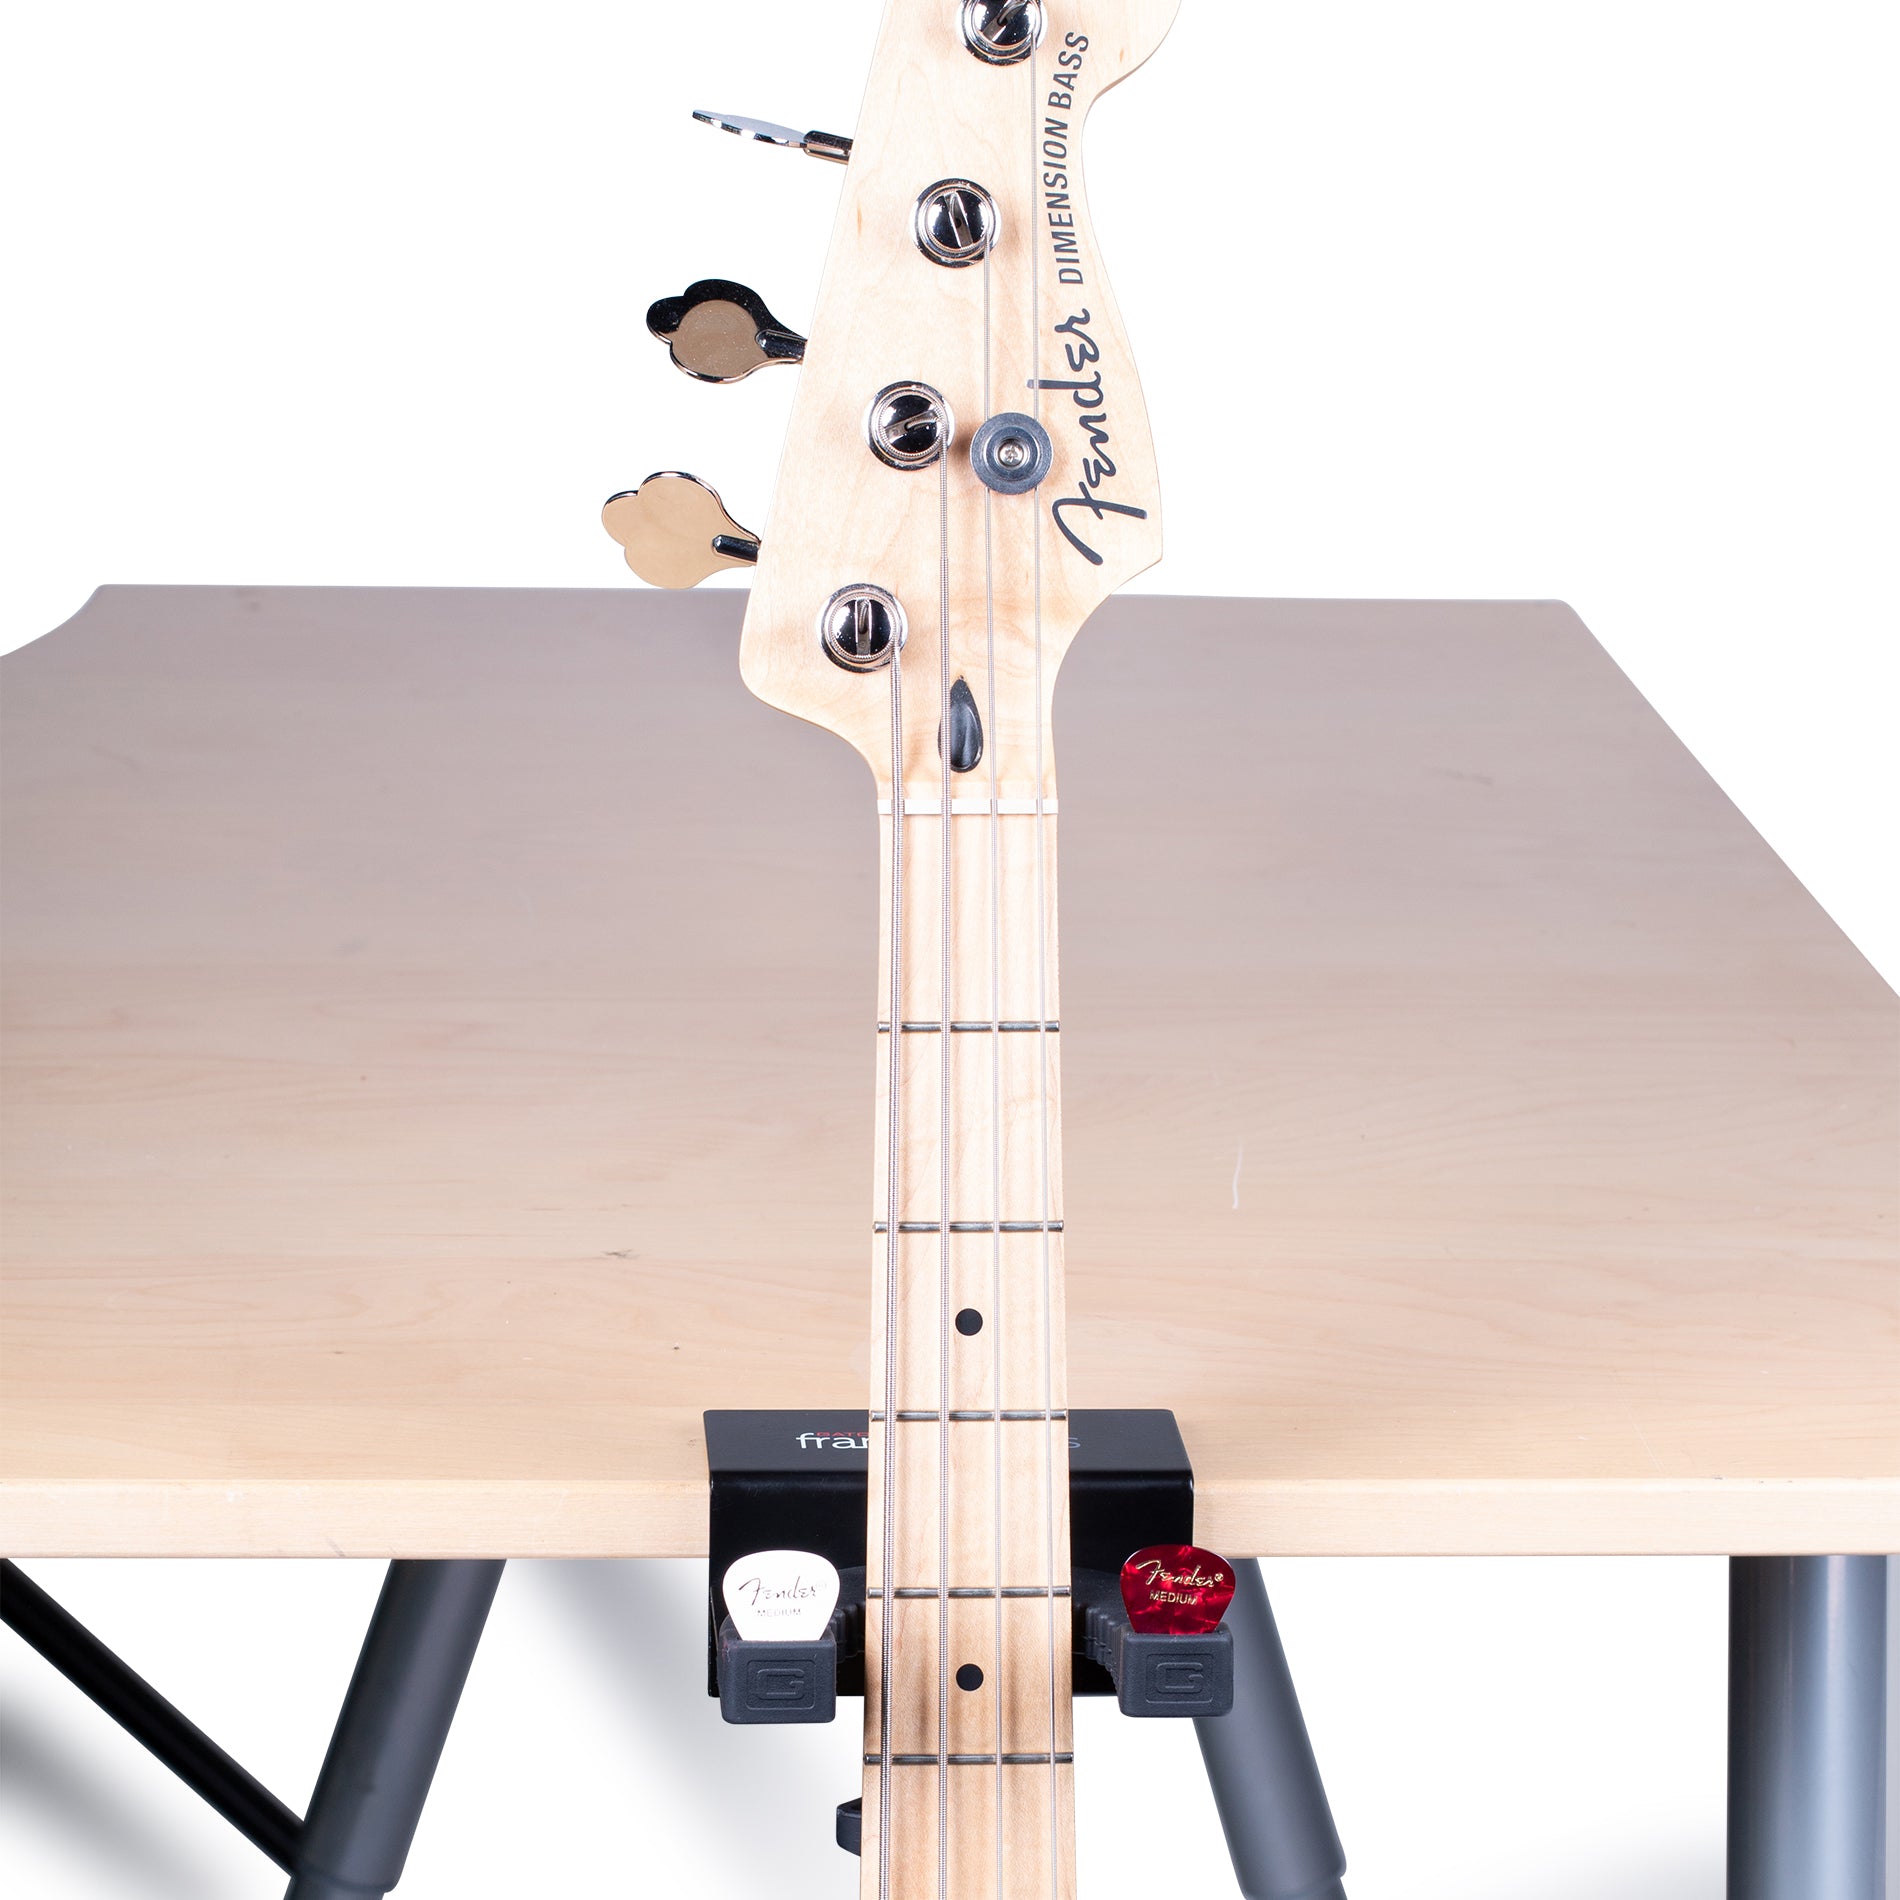 Gator Frameworks | Desk Clamping Guitar Rest with Clamp Mount